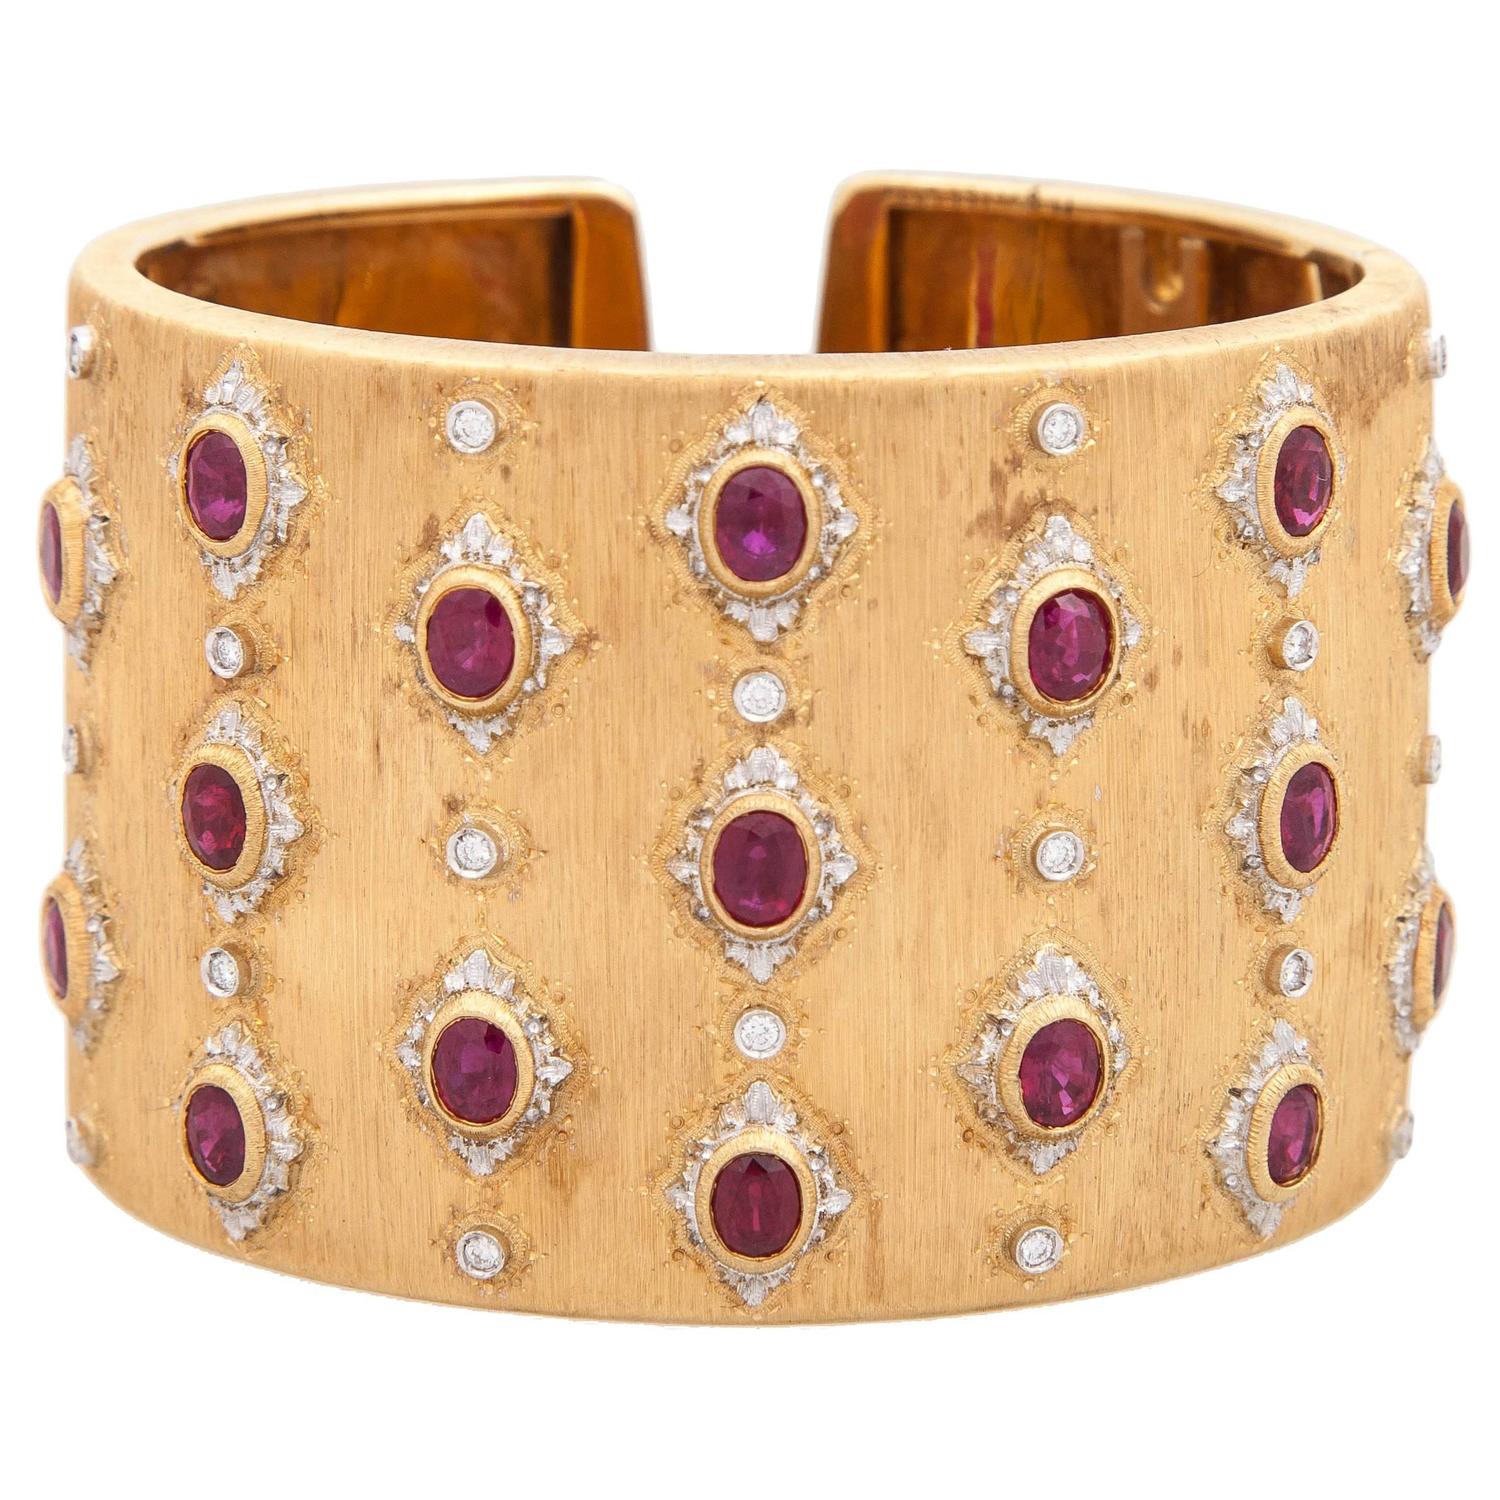 Buccellati Ruby Diamond Gold Cuff Bracelet For Sale at 1stdibs